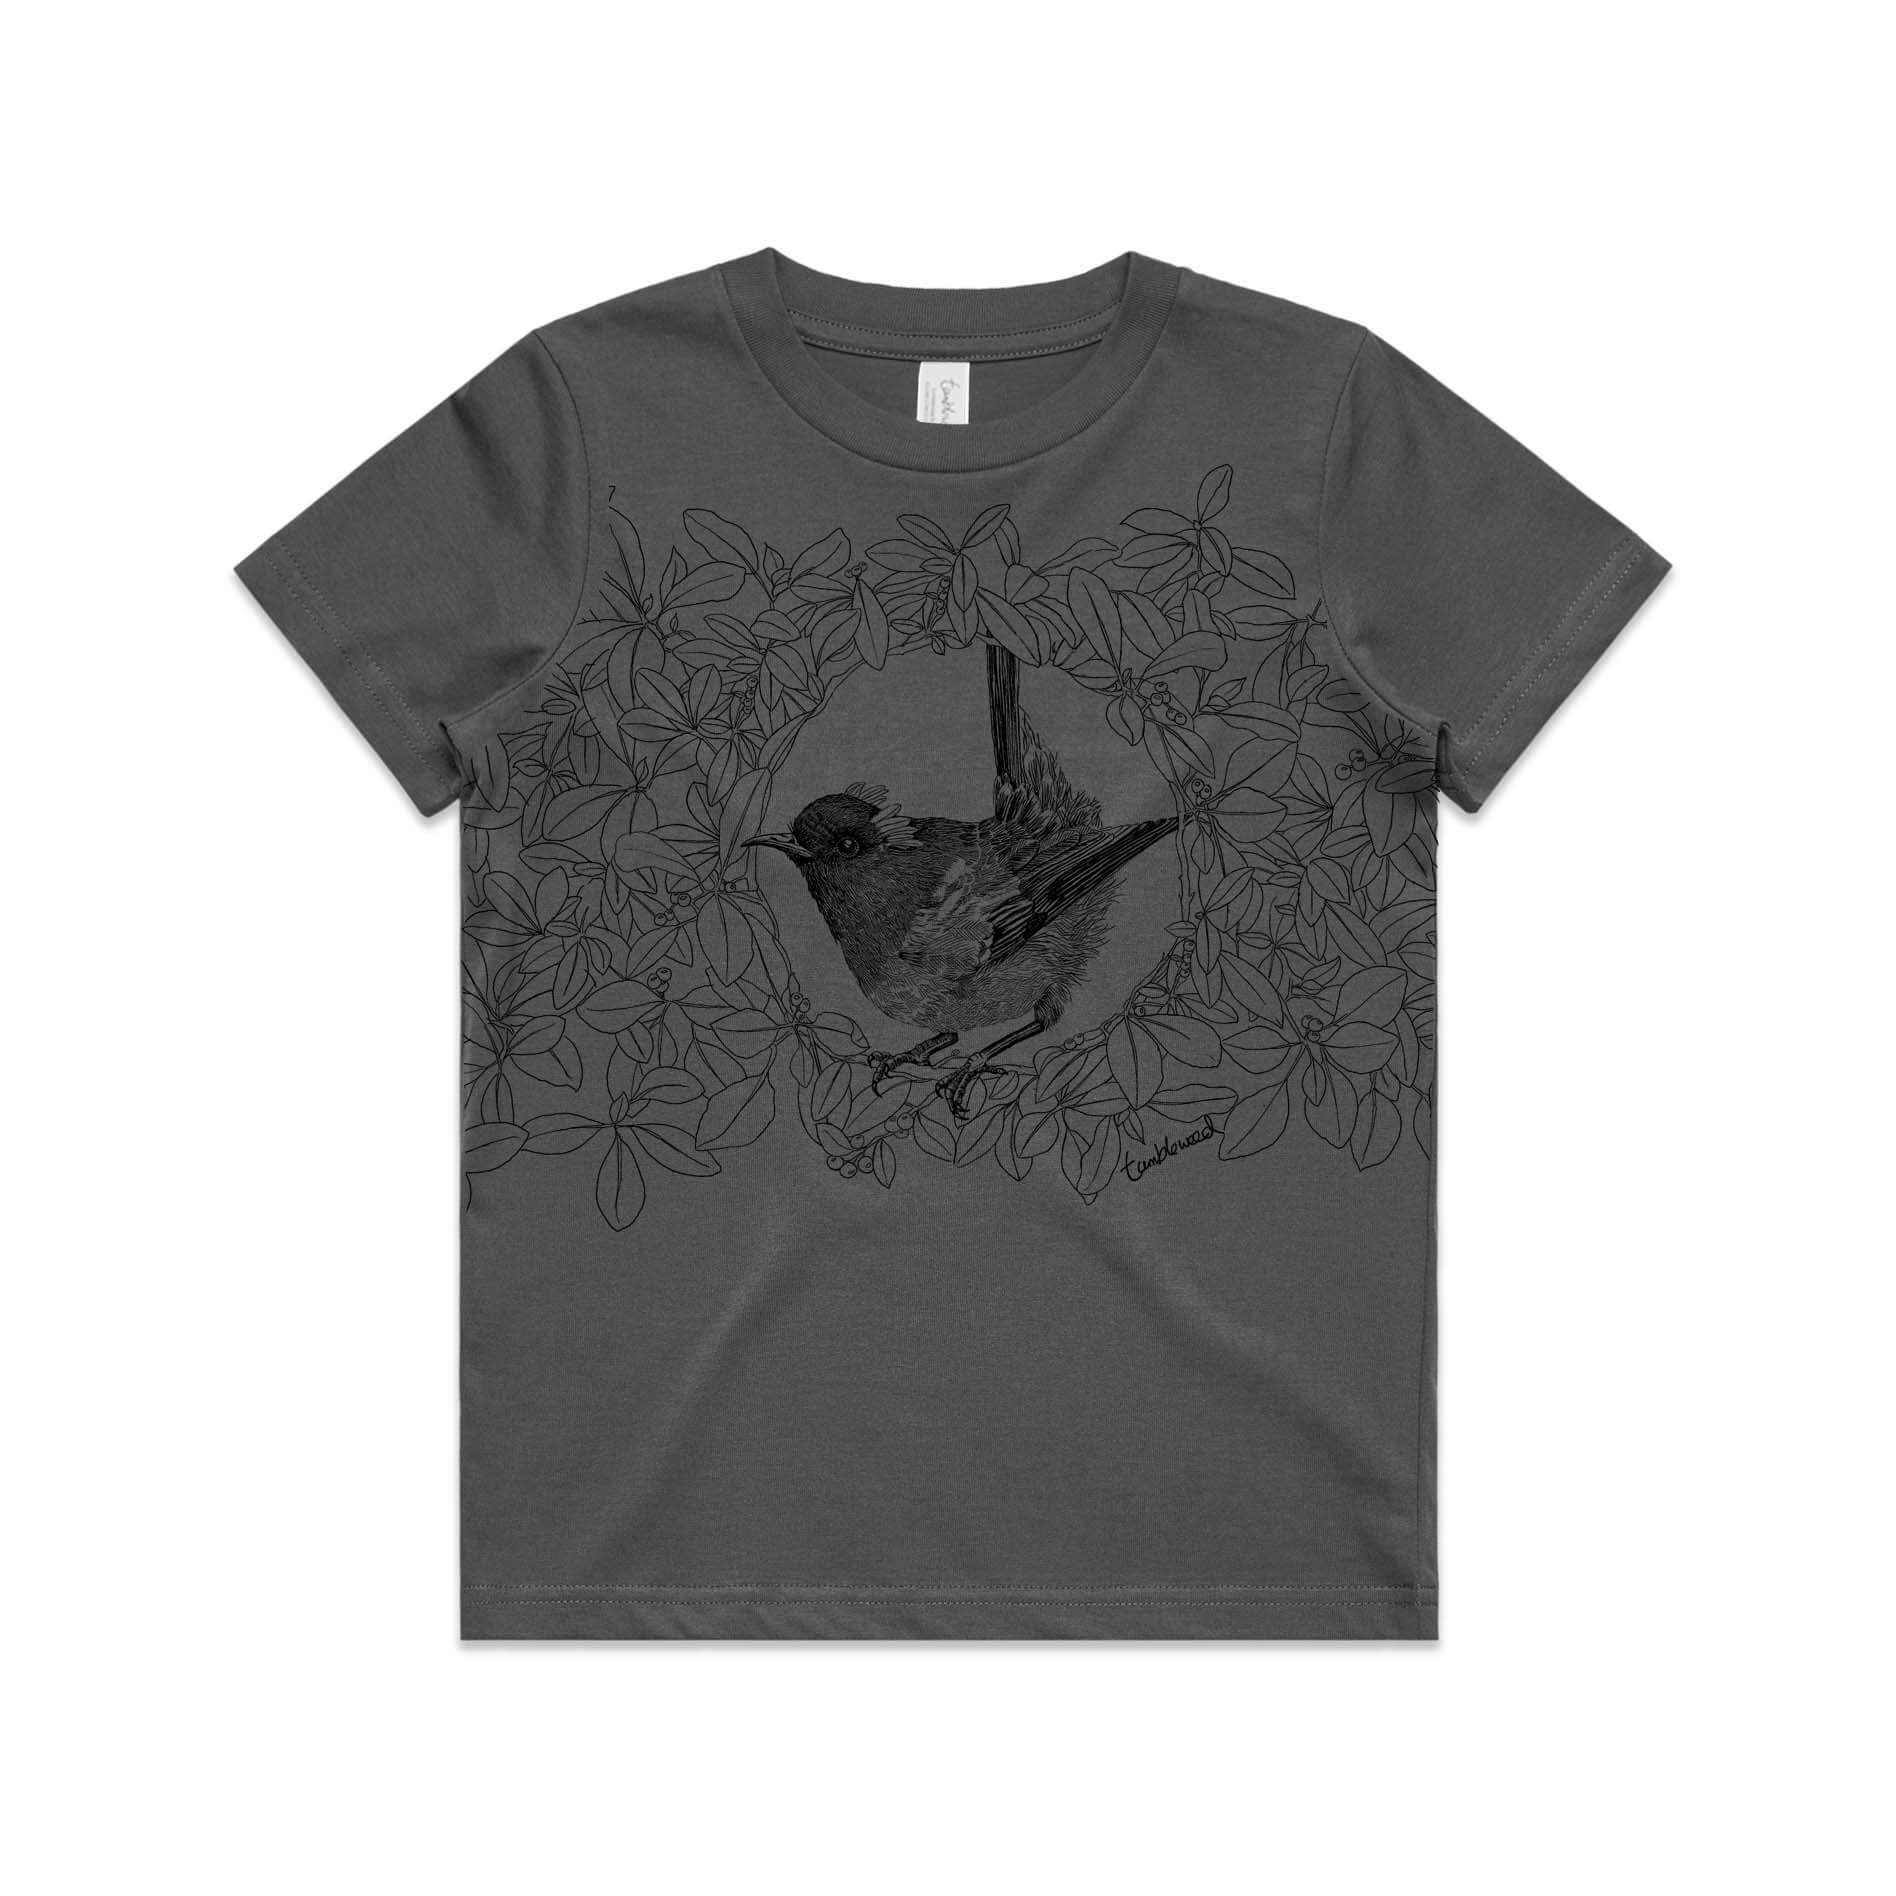 Charcoal, cotton kids' t-shirt with screen printed Kids hihi/stitchbird design.